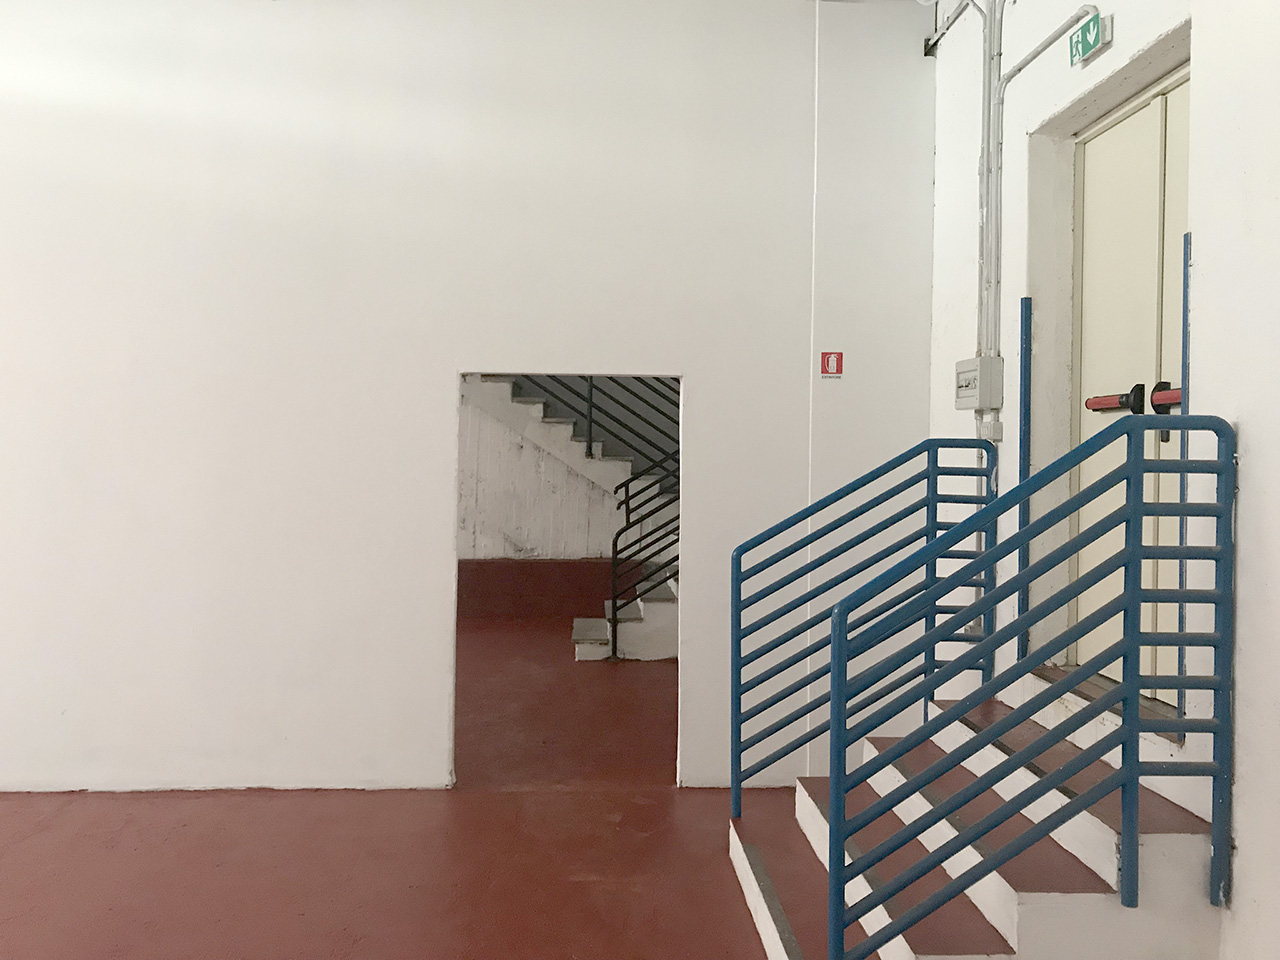 Archive for rent in Milan - 95 sqm (1023 sqft) - Atlantic Business Center